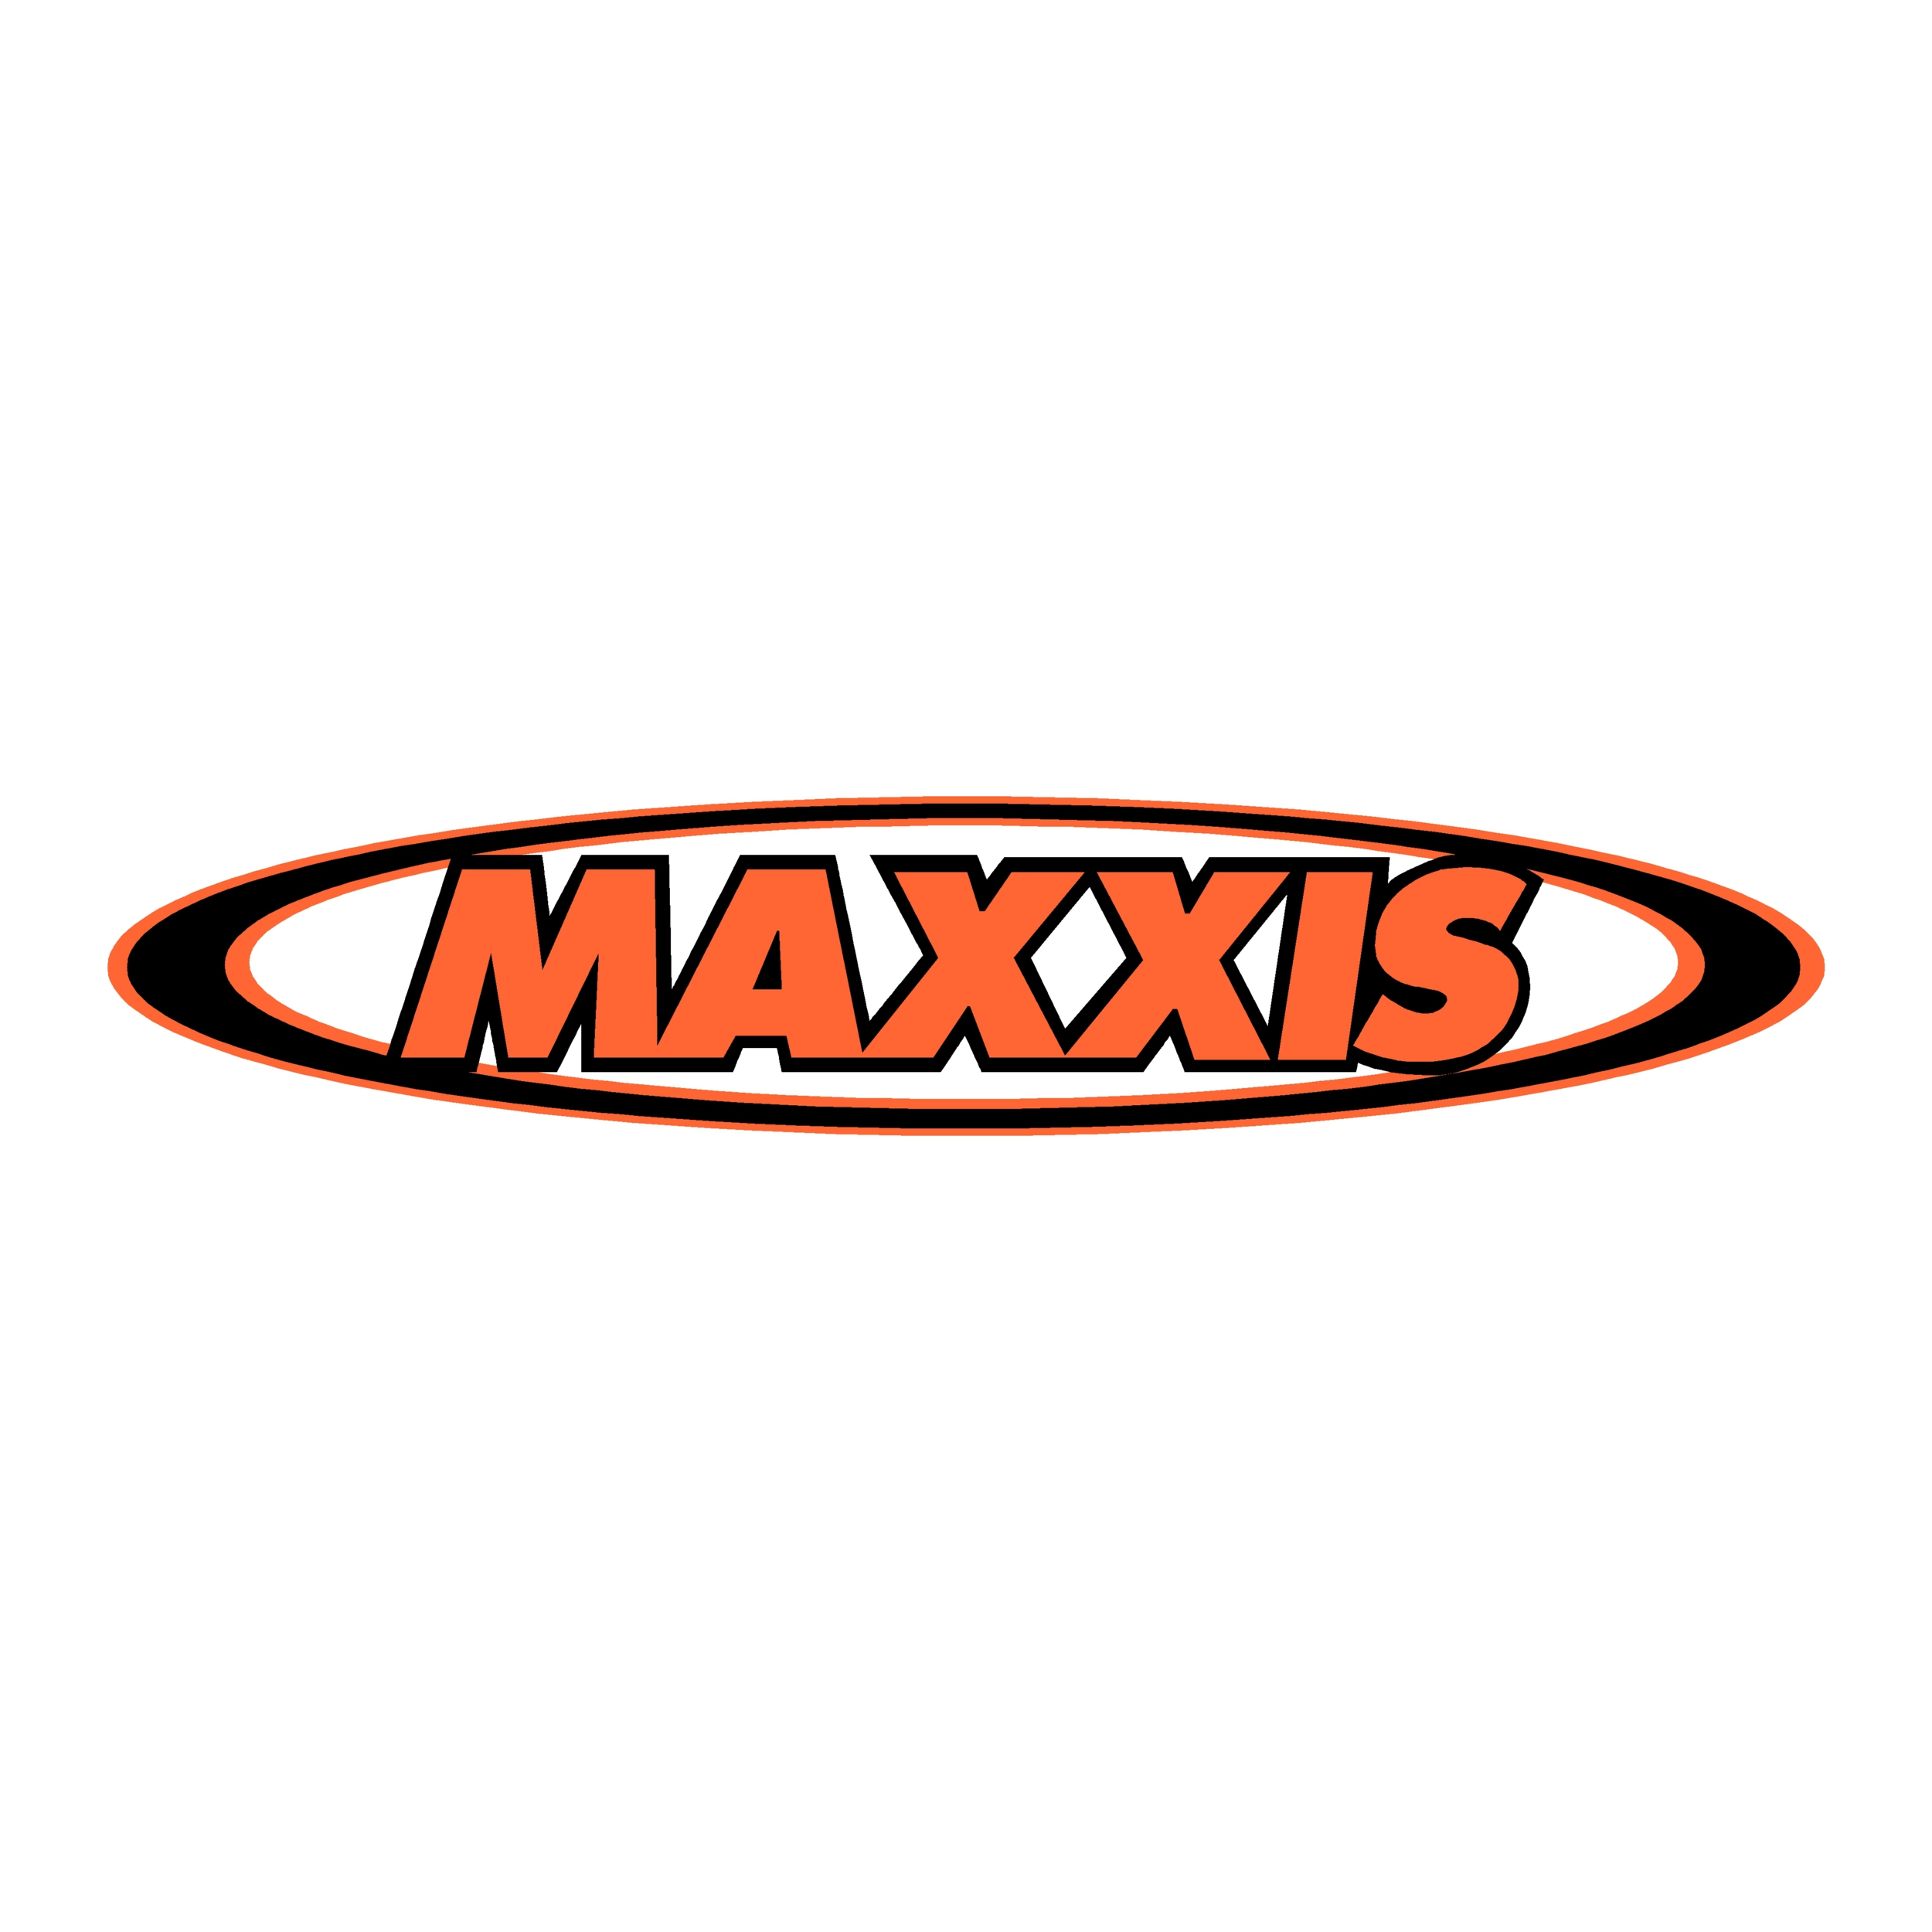 stickers maxxis ref 3 tuning audio 4x4 tout terrain car auto moto camion competition deco rallye autocollant